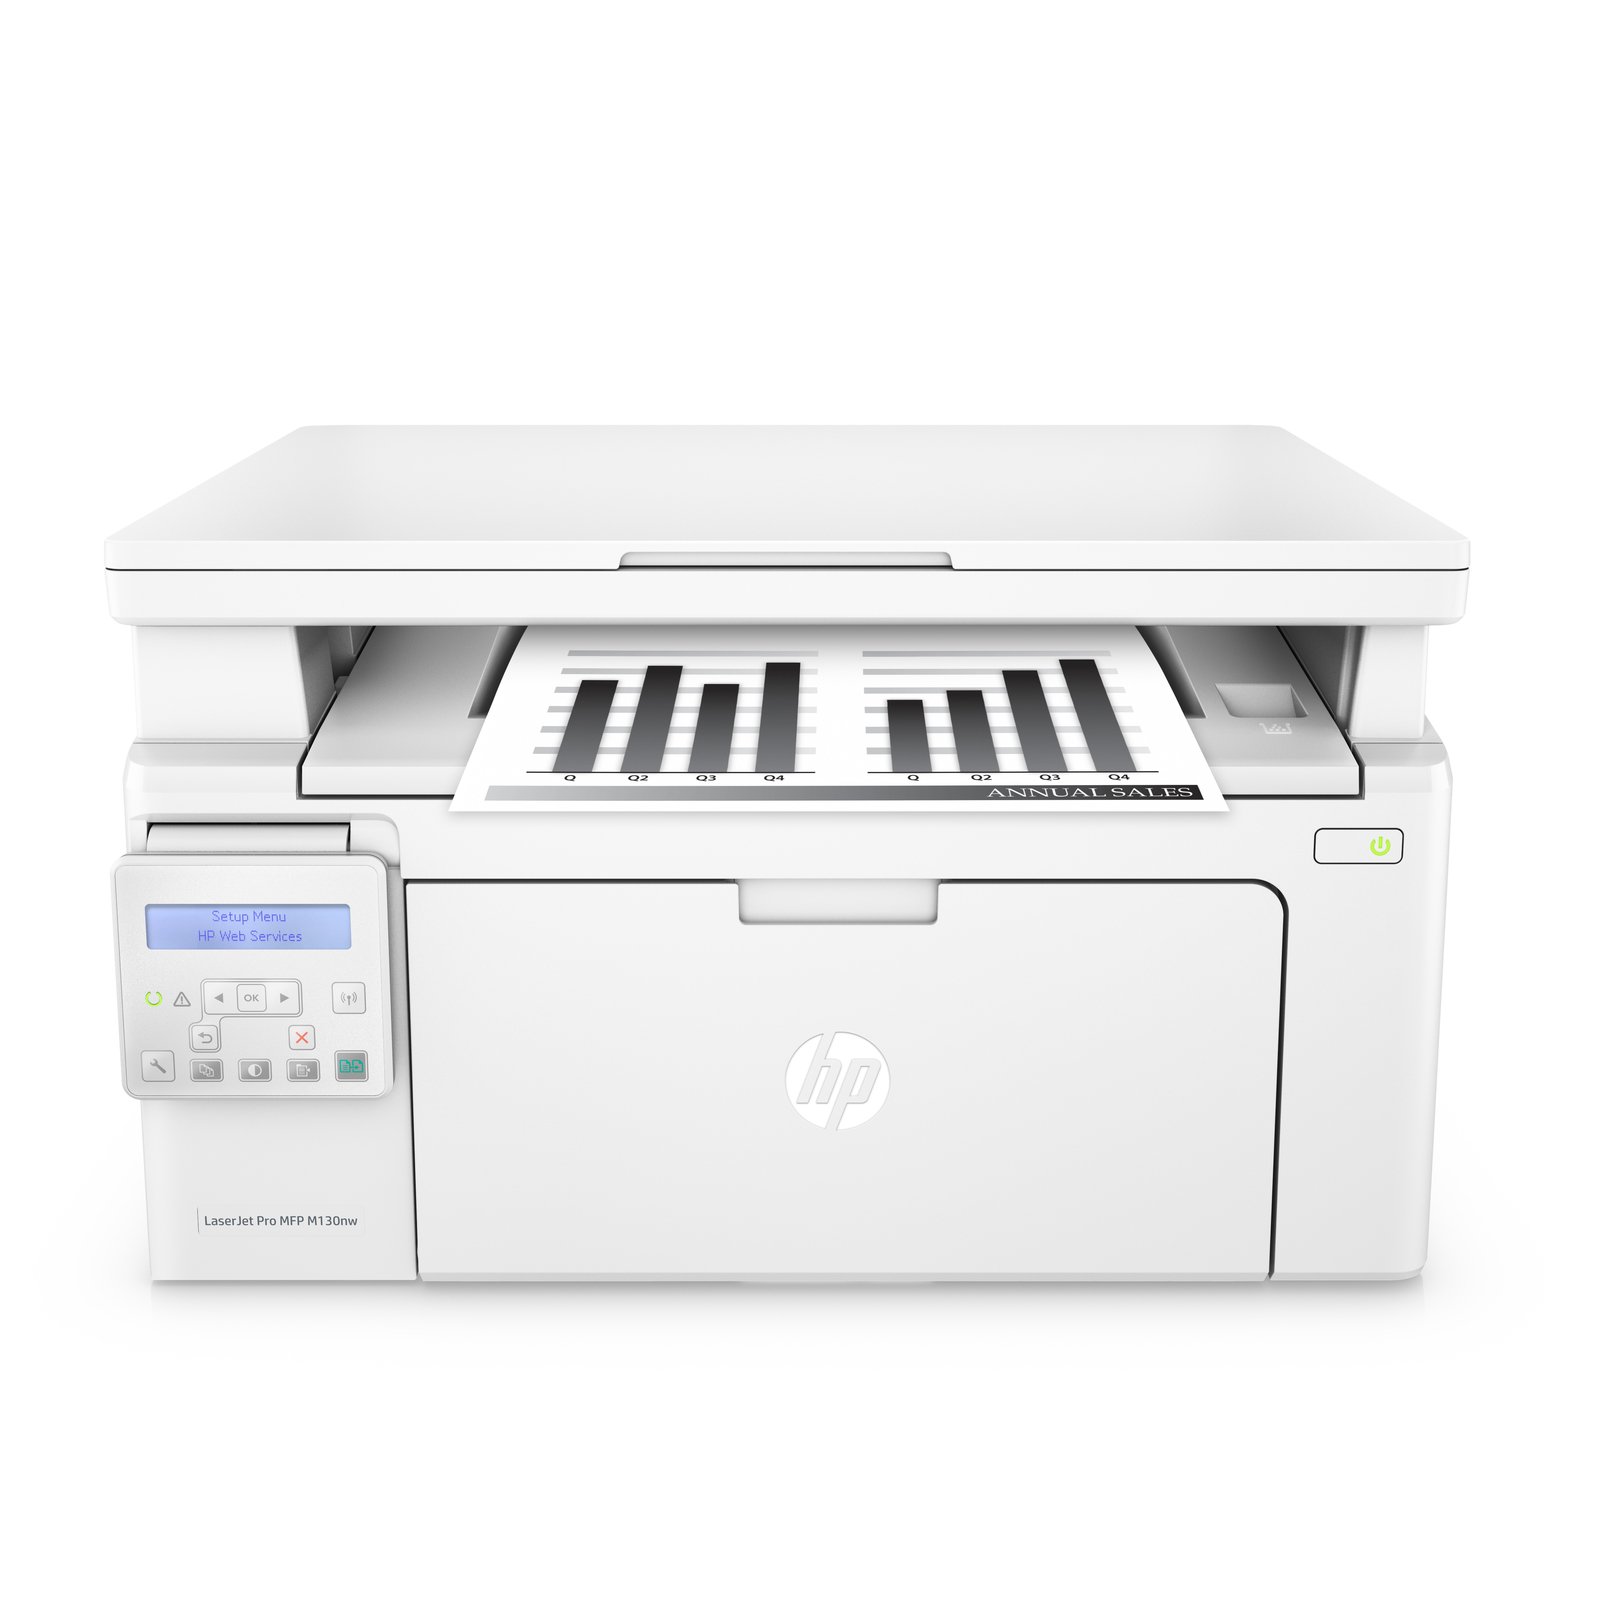 LaserJet Ultra MFP M134 Printer series